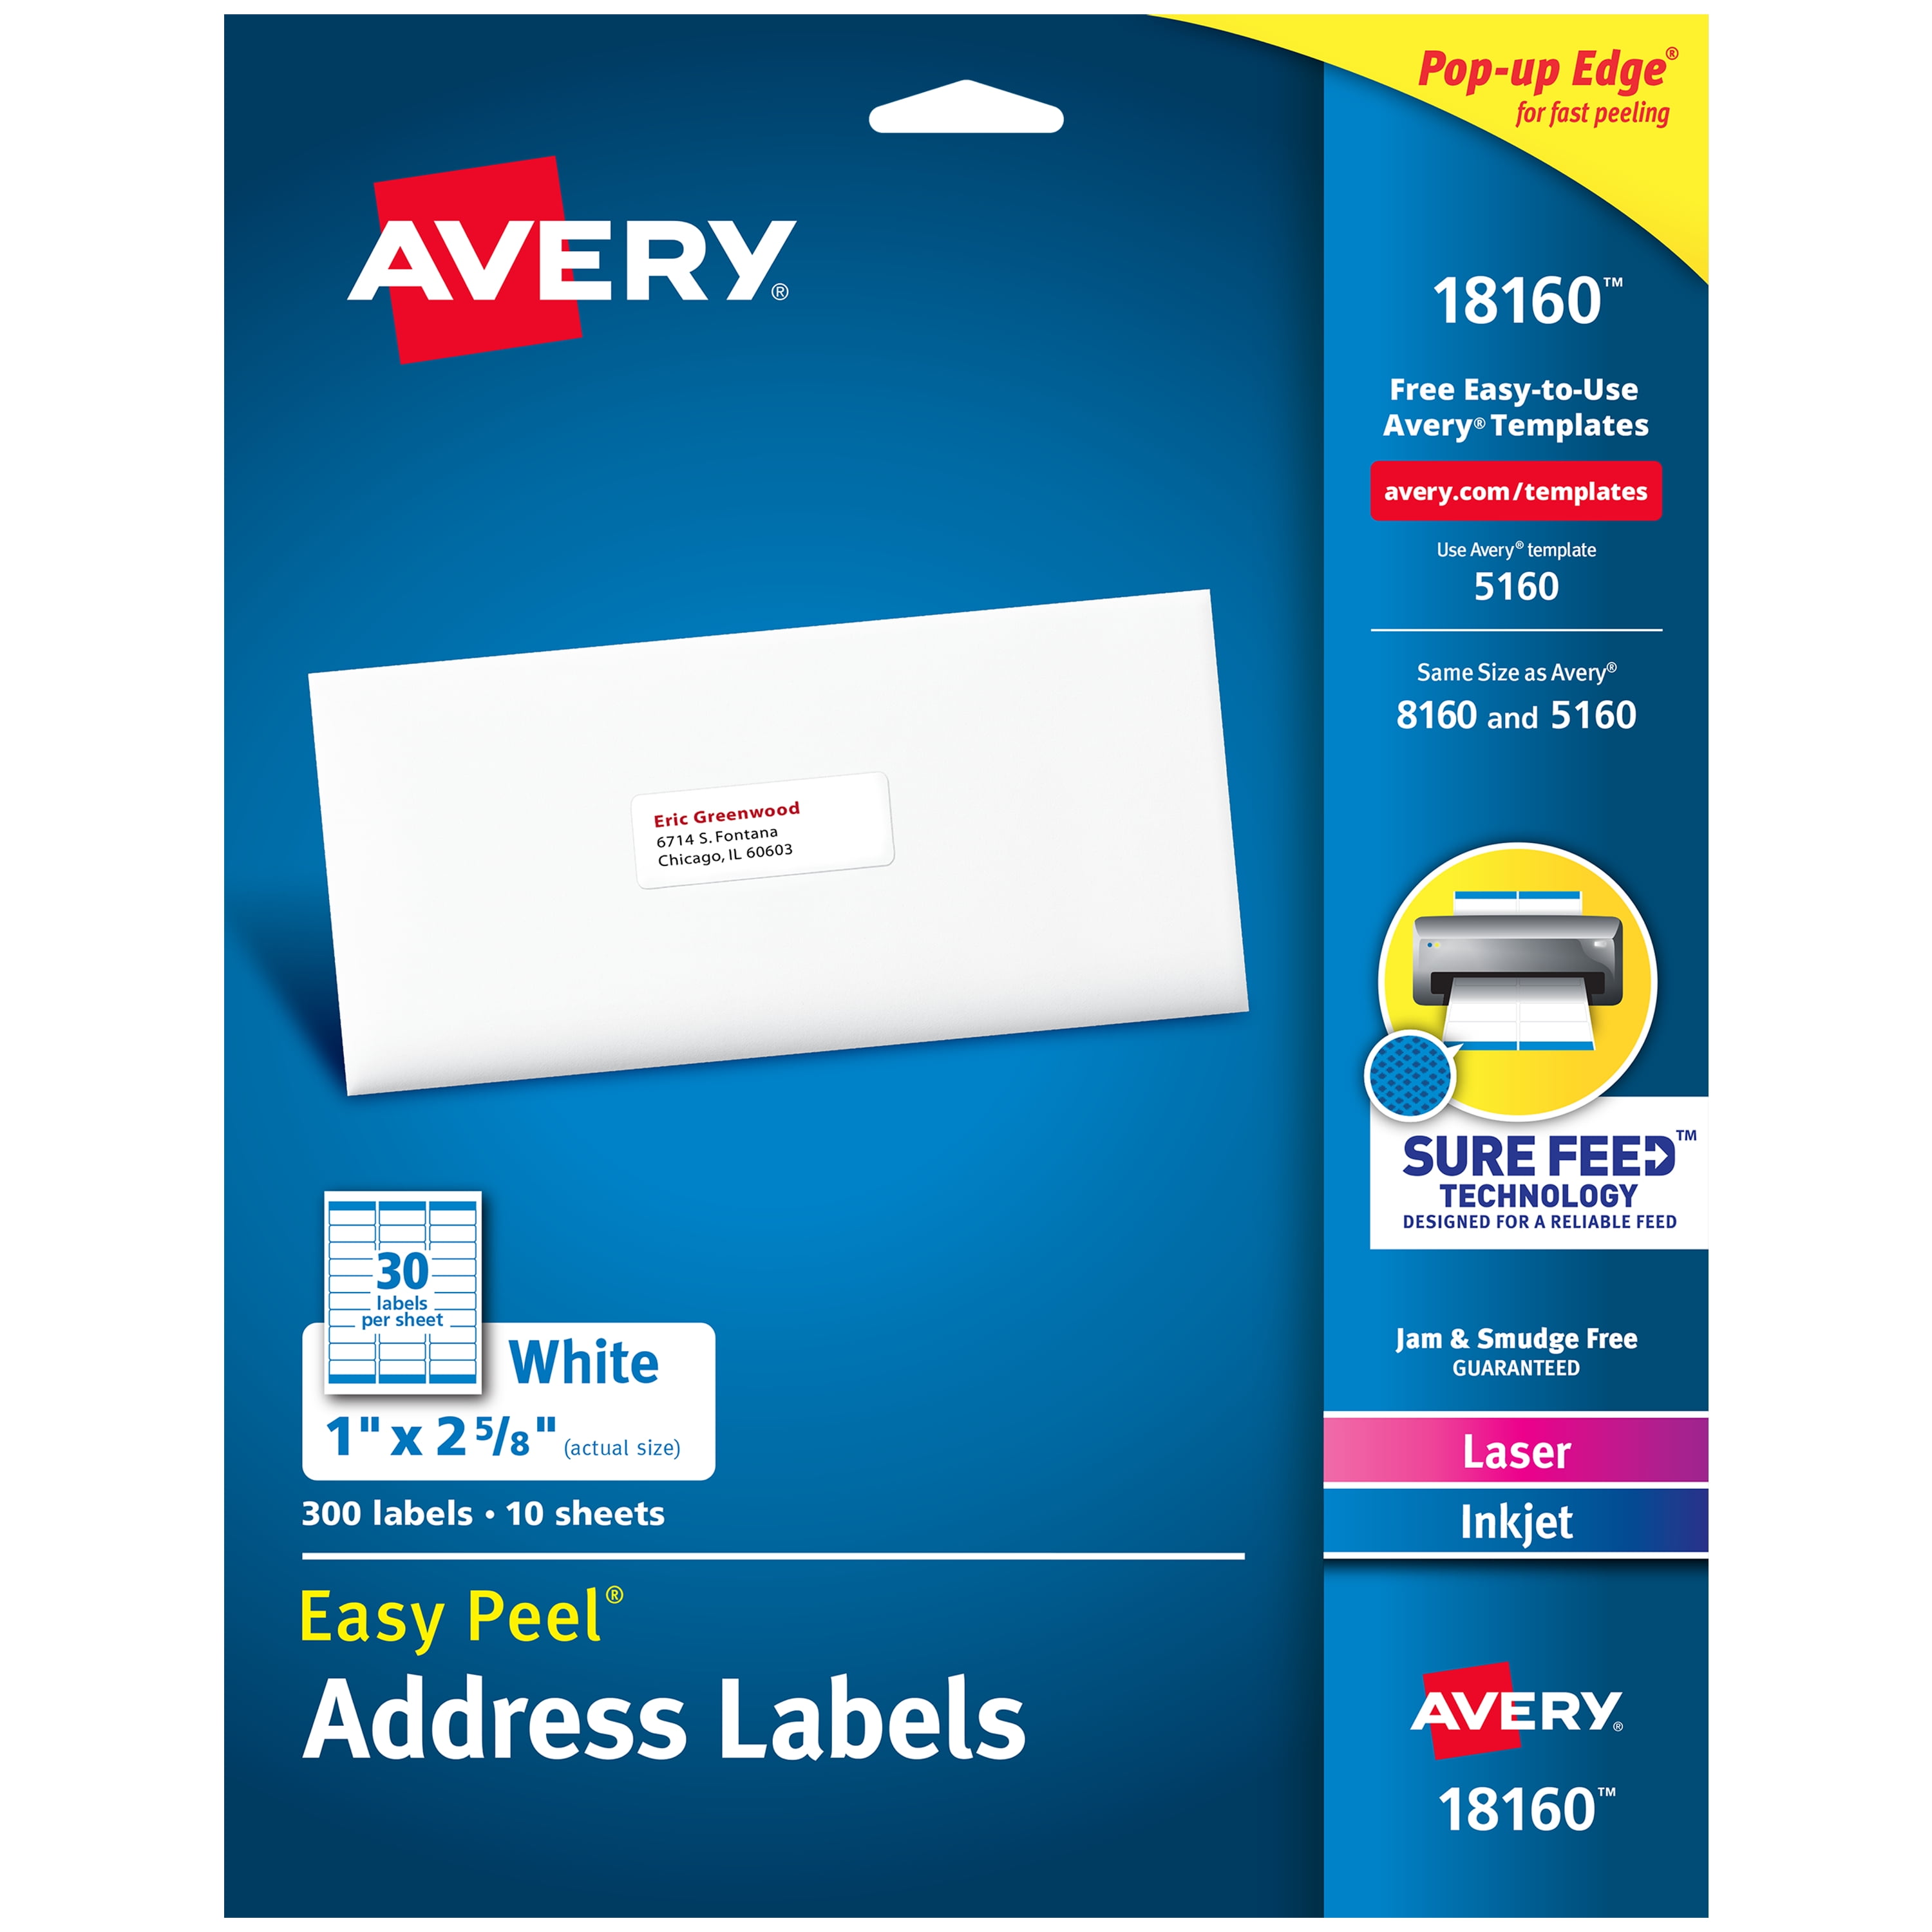 Avery Easy Peel Address Labels, Sure Feed Technology, White, 1" x 2-5/8", Laser, Inkjet, 300 Labels